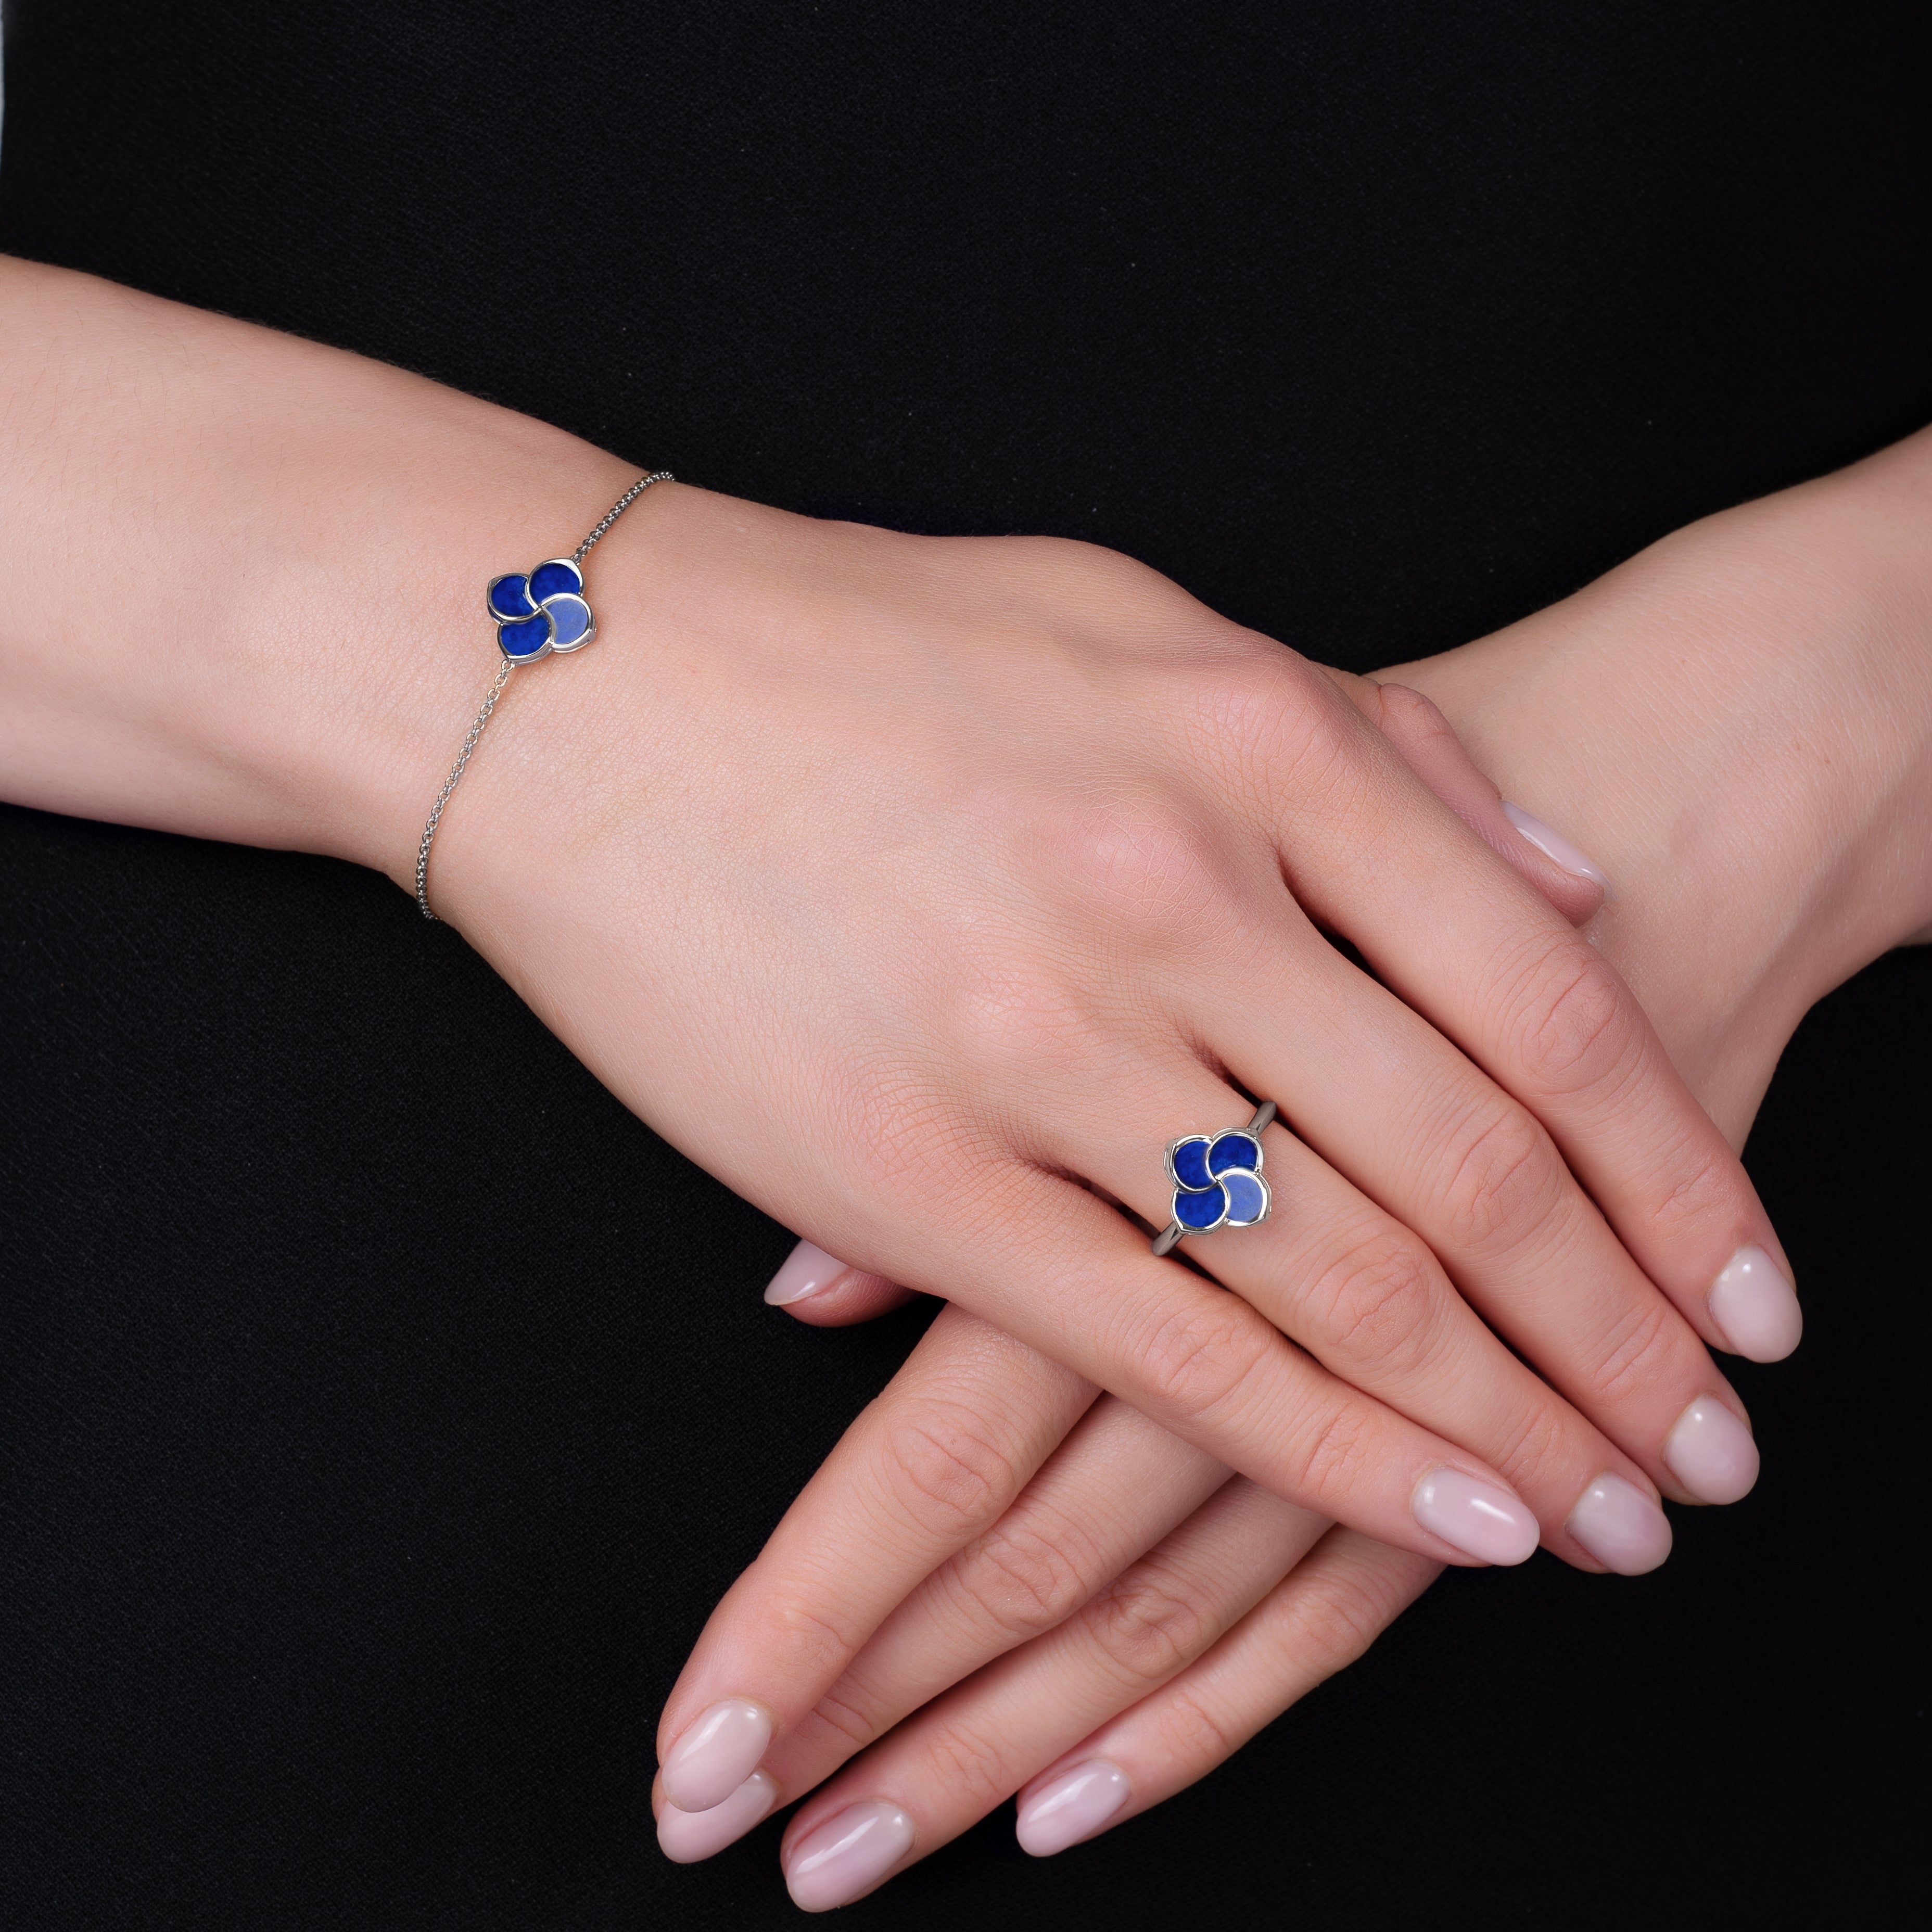 FLUMINA mini Ring with Lapis Lazuli